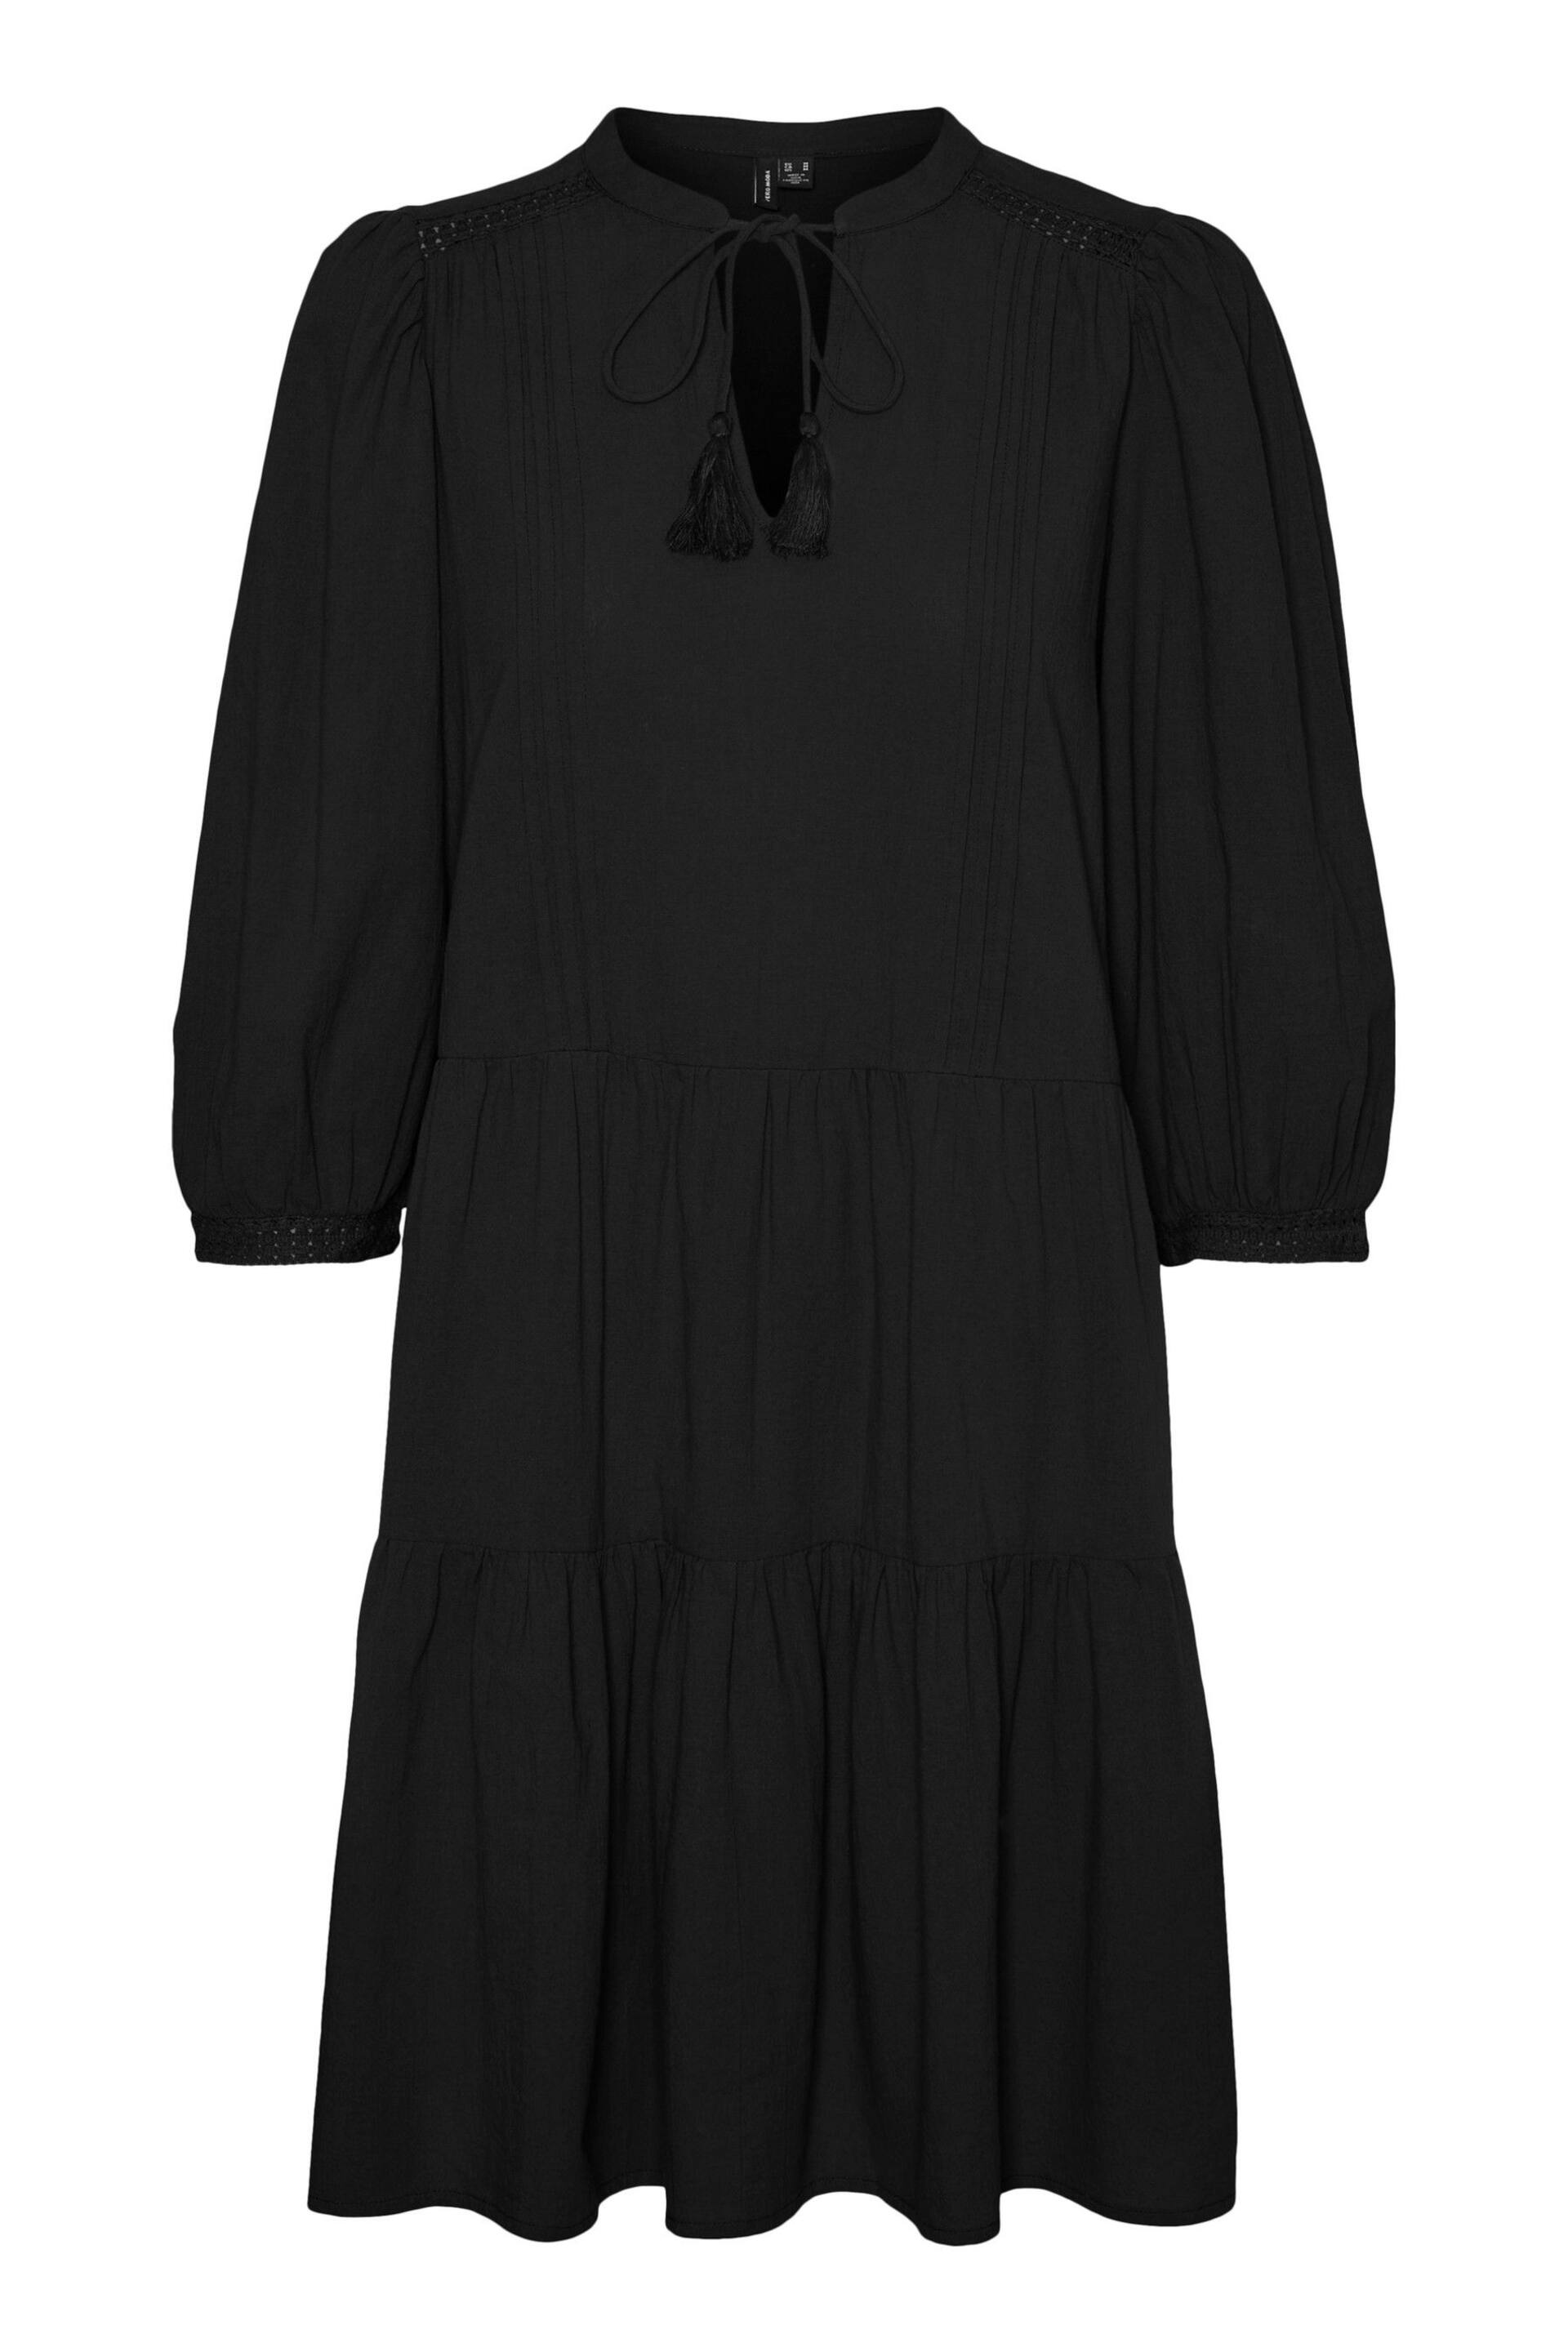 VERO MODA Black Embroidered Detail Cotton Summer Boho Smock Dress - Image 5 of 5